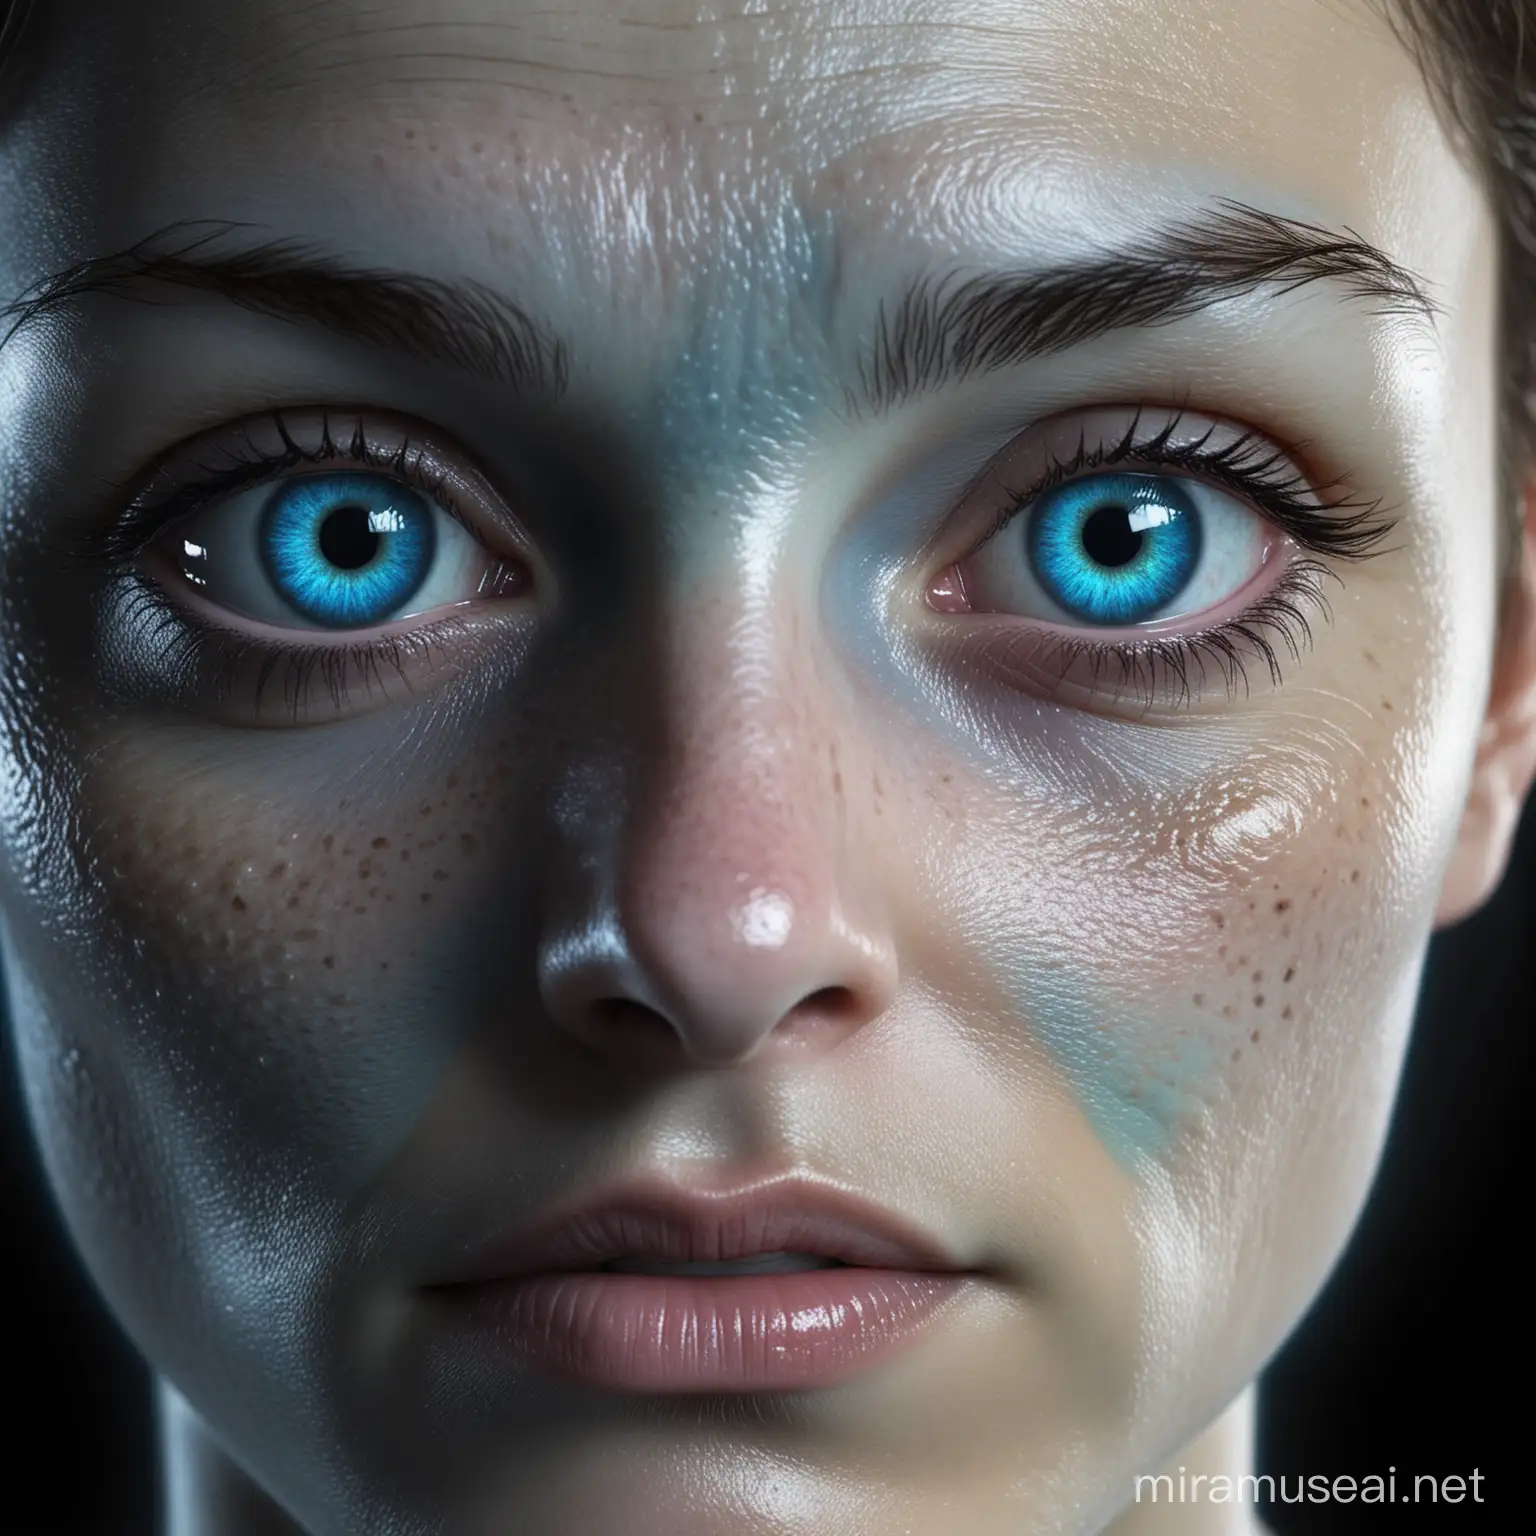 Generate bluish, glowing-eyed aliens reincarnated in human faces
